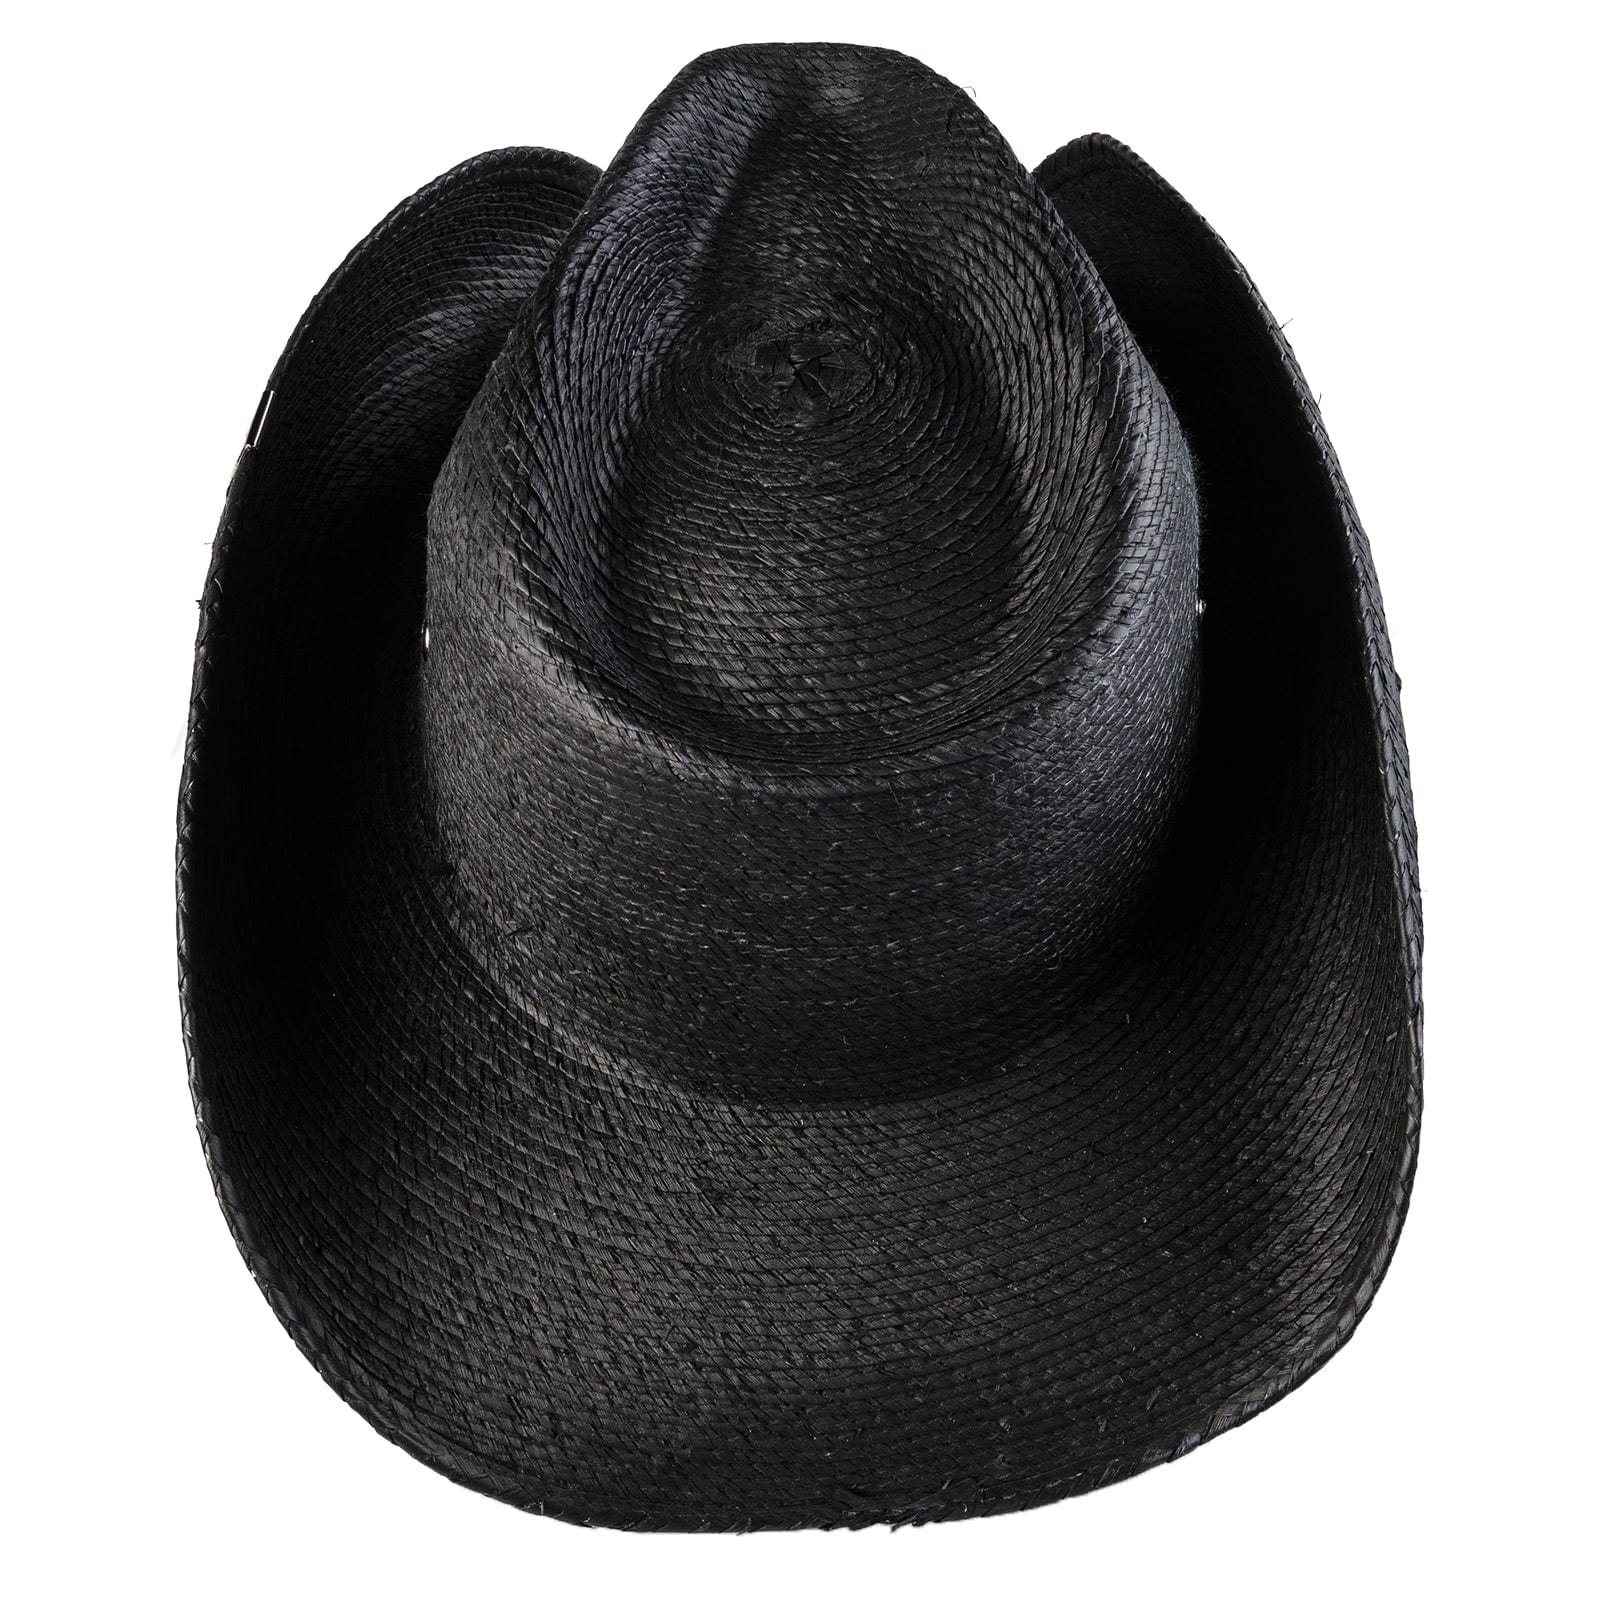 Hat WORNSTAR - Hellrider - Black Rocker Cowboy